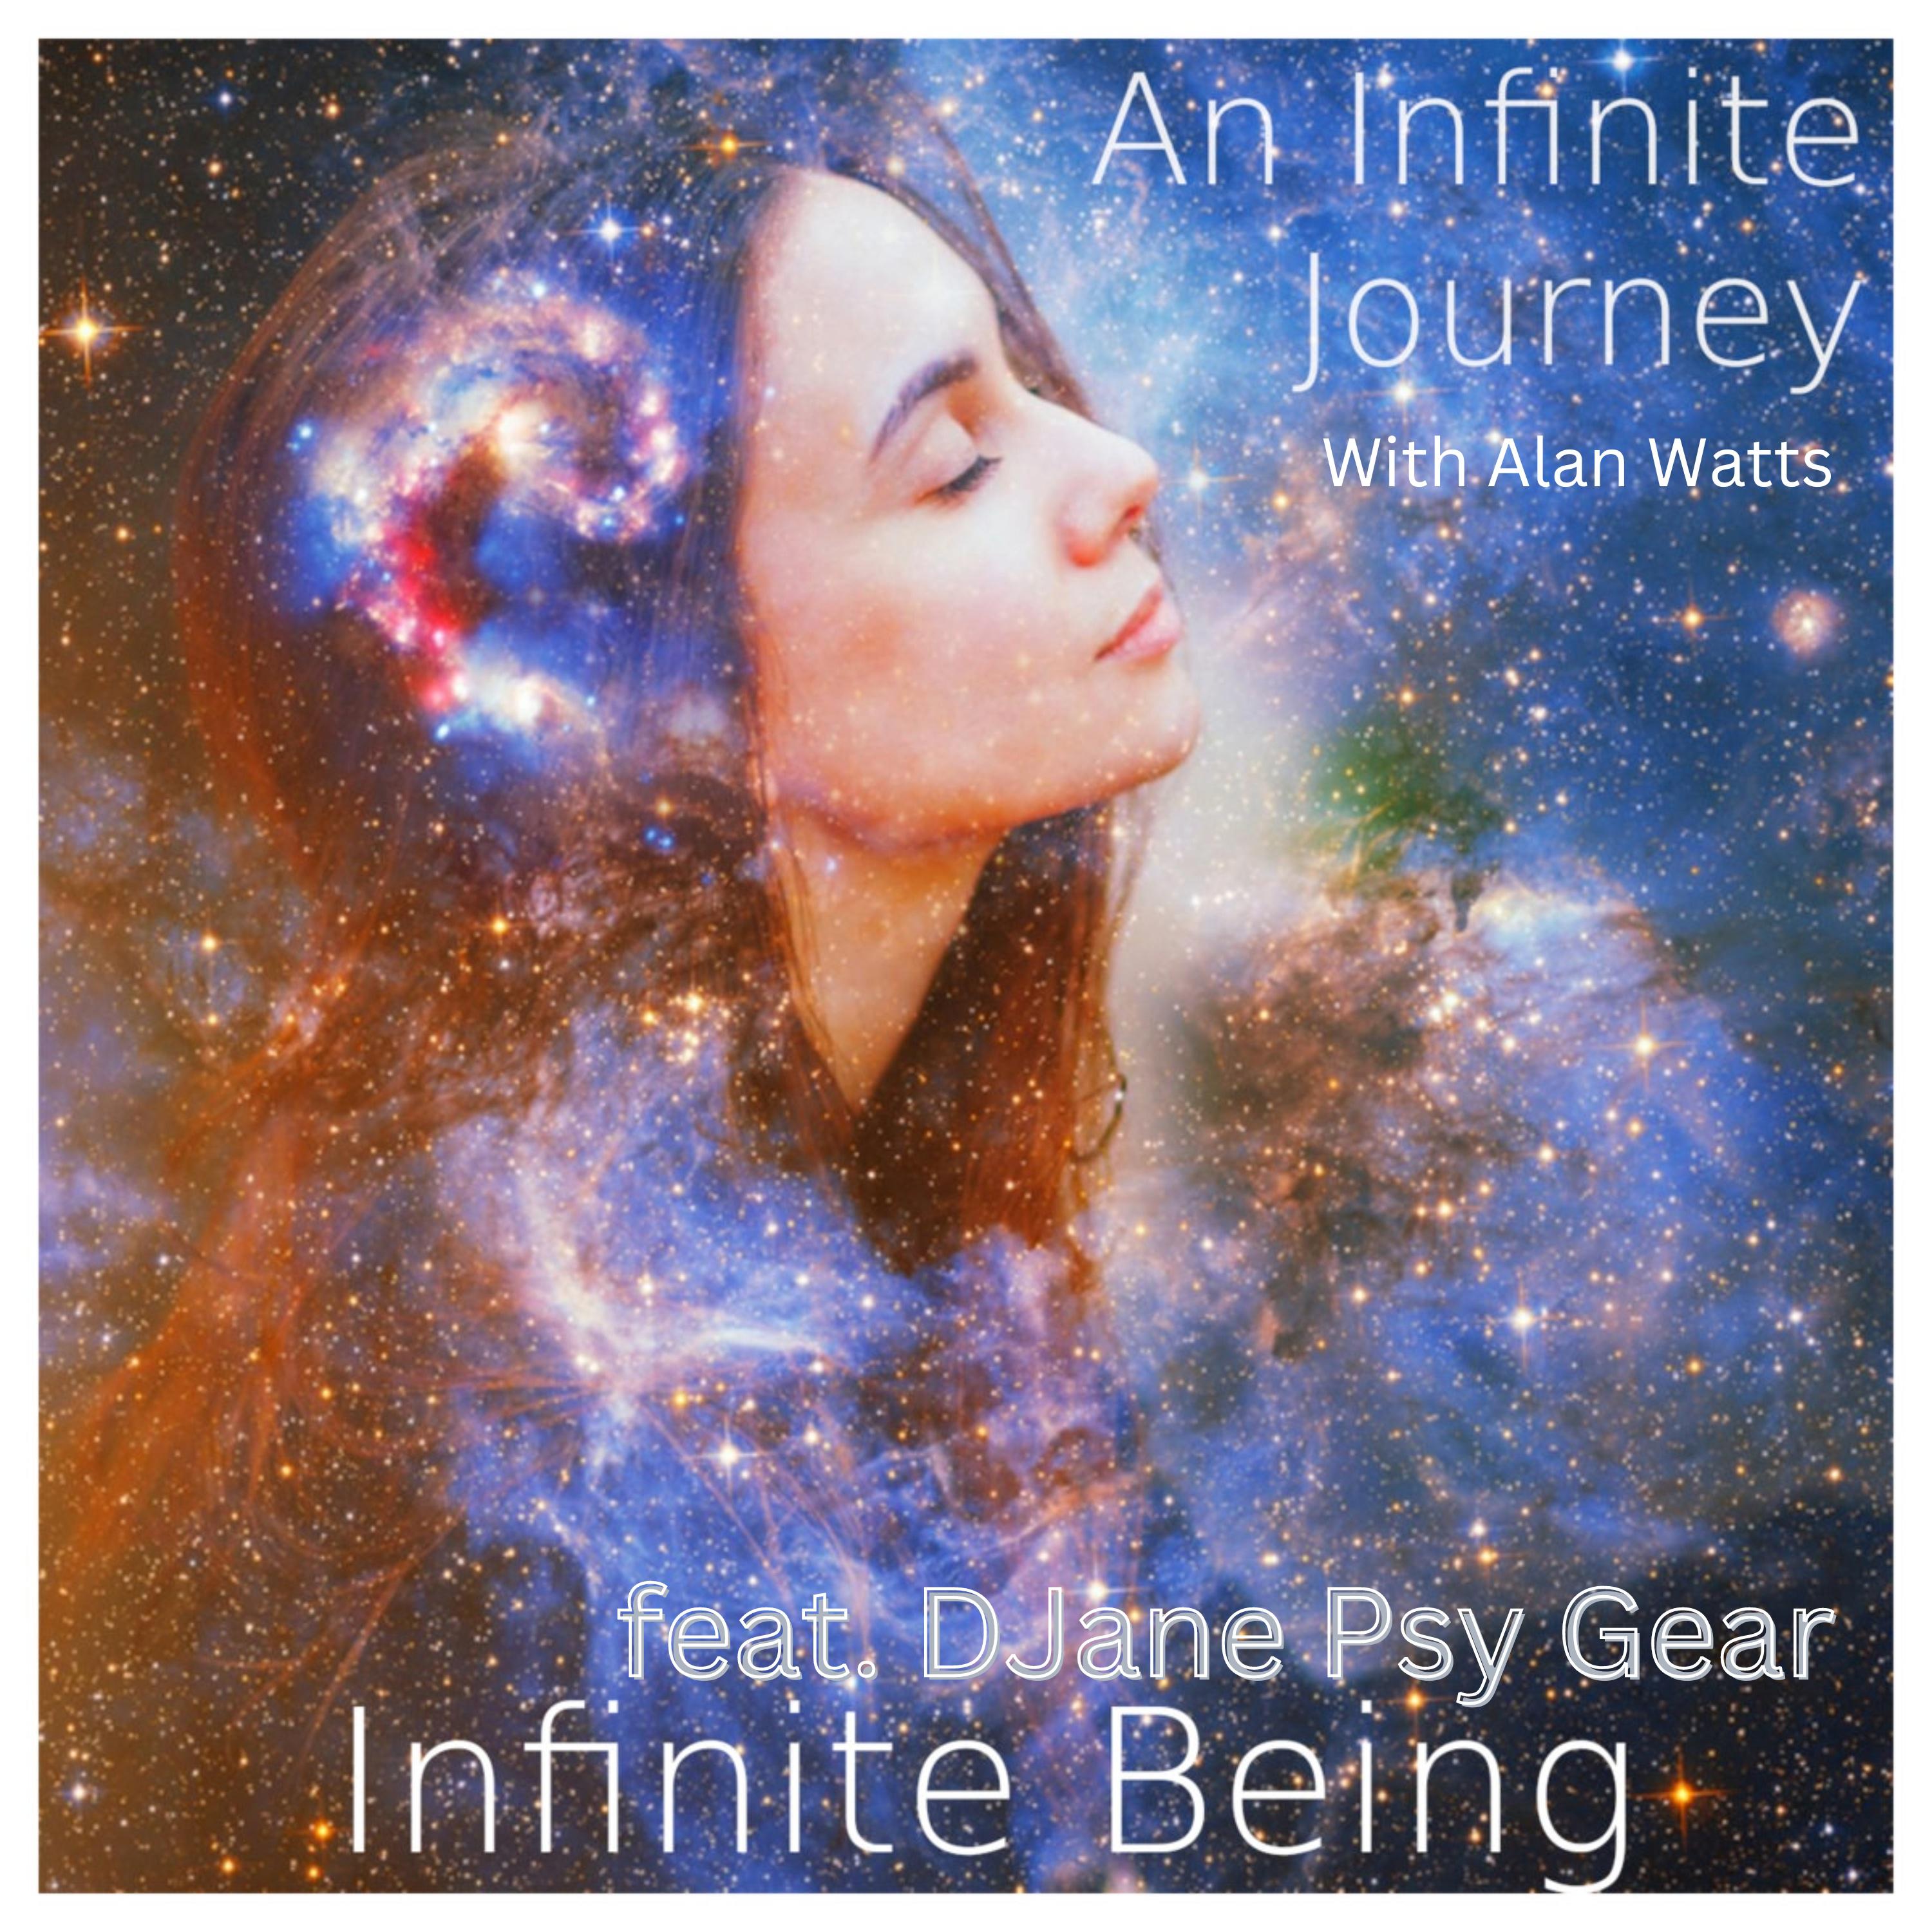 Infinite Being - An Infinite Journey